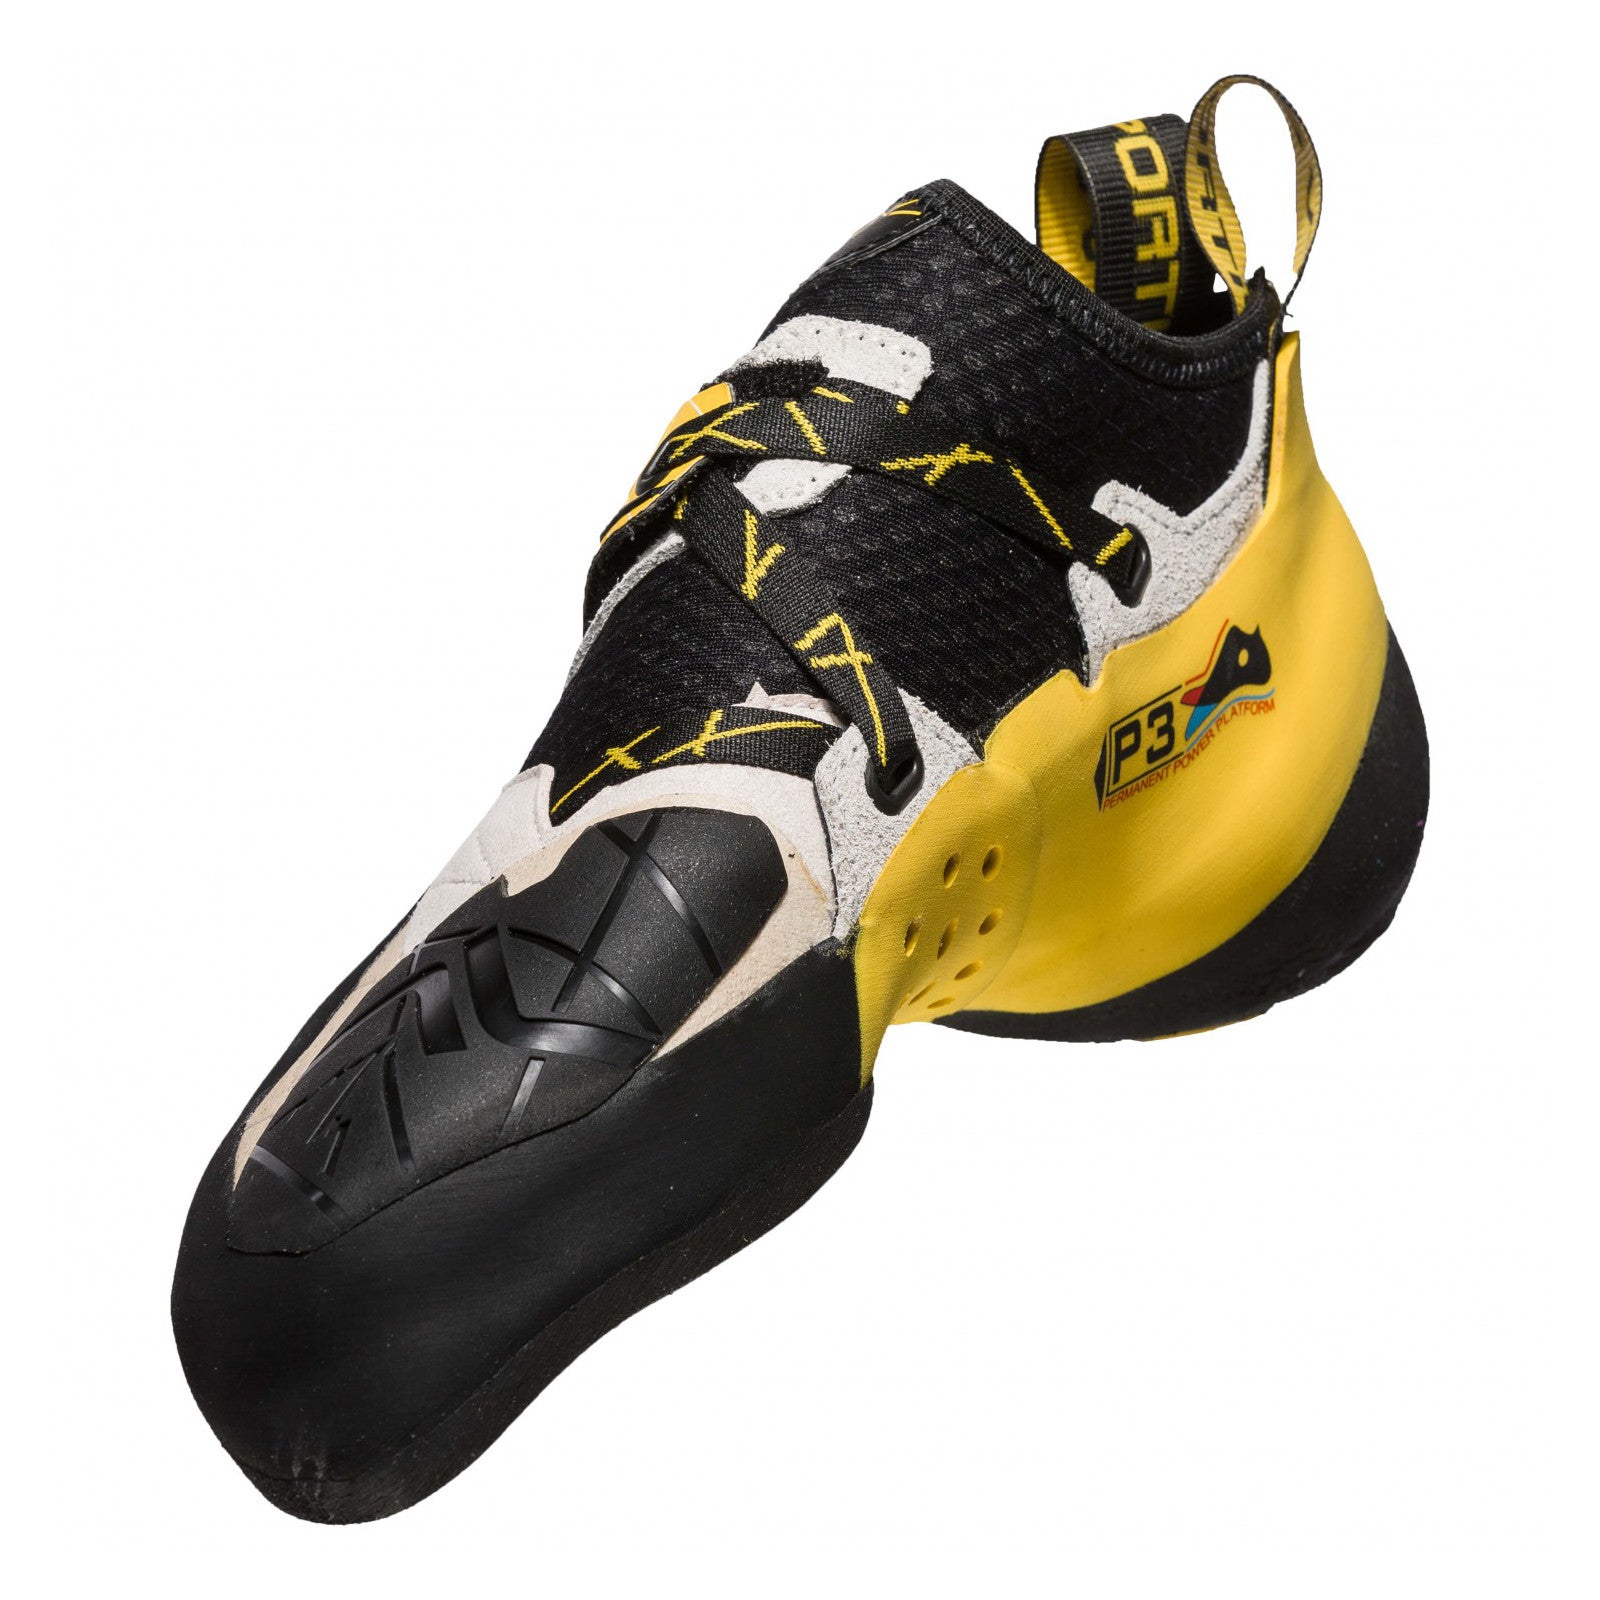 La Sportiva Solution Climbing Shoe | Buy Now at Rock+Run